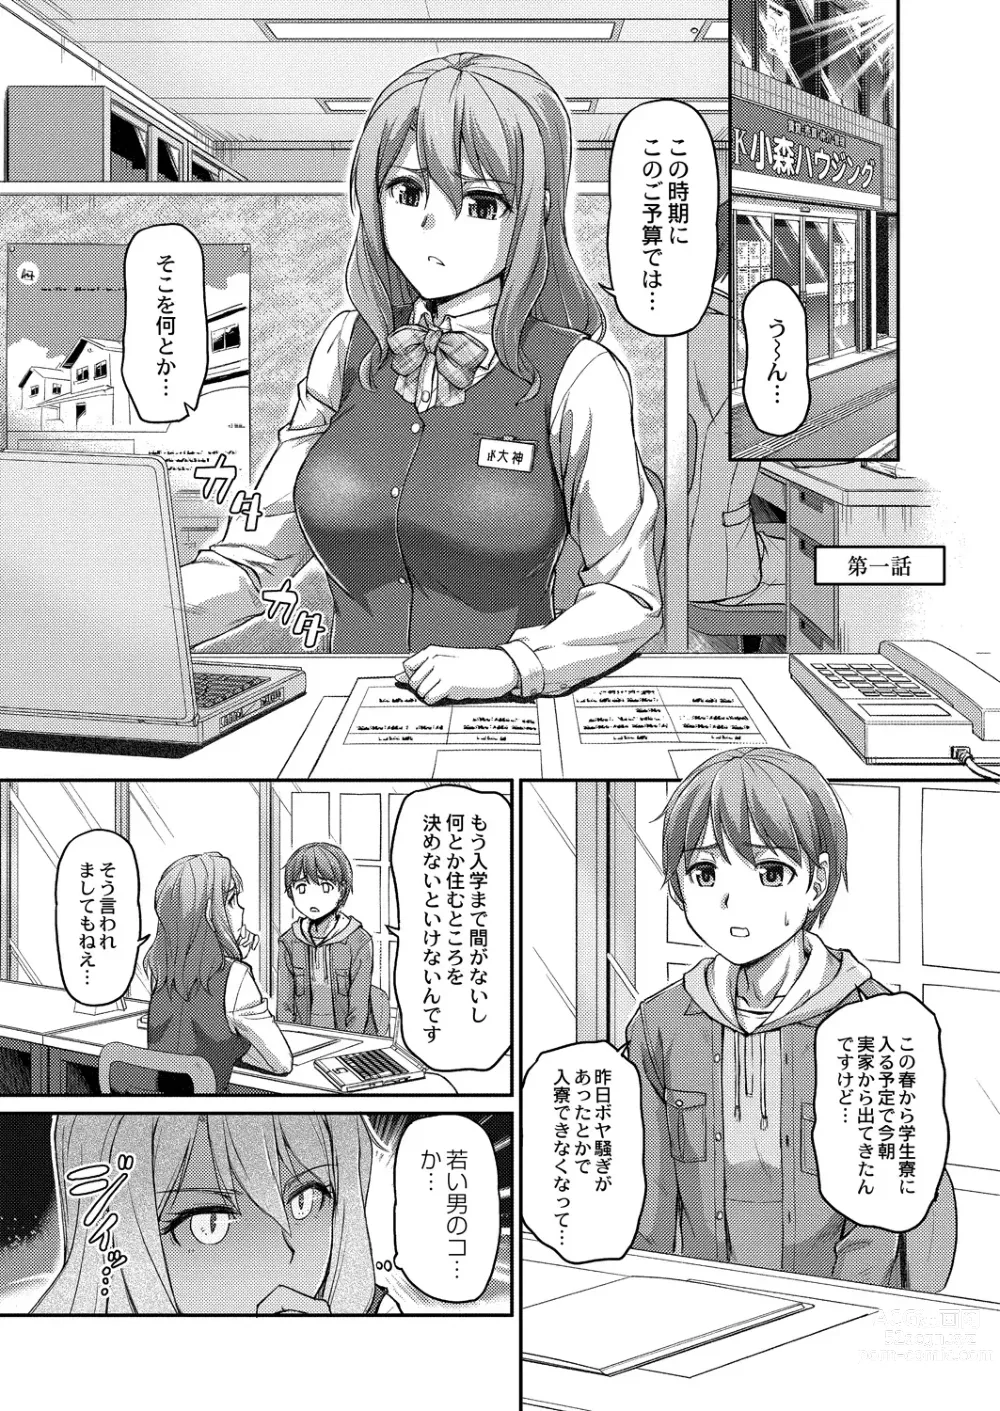 Page 3 of manga Youjokan no Nichijou - Daily Life at The Yojokan